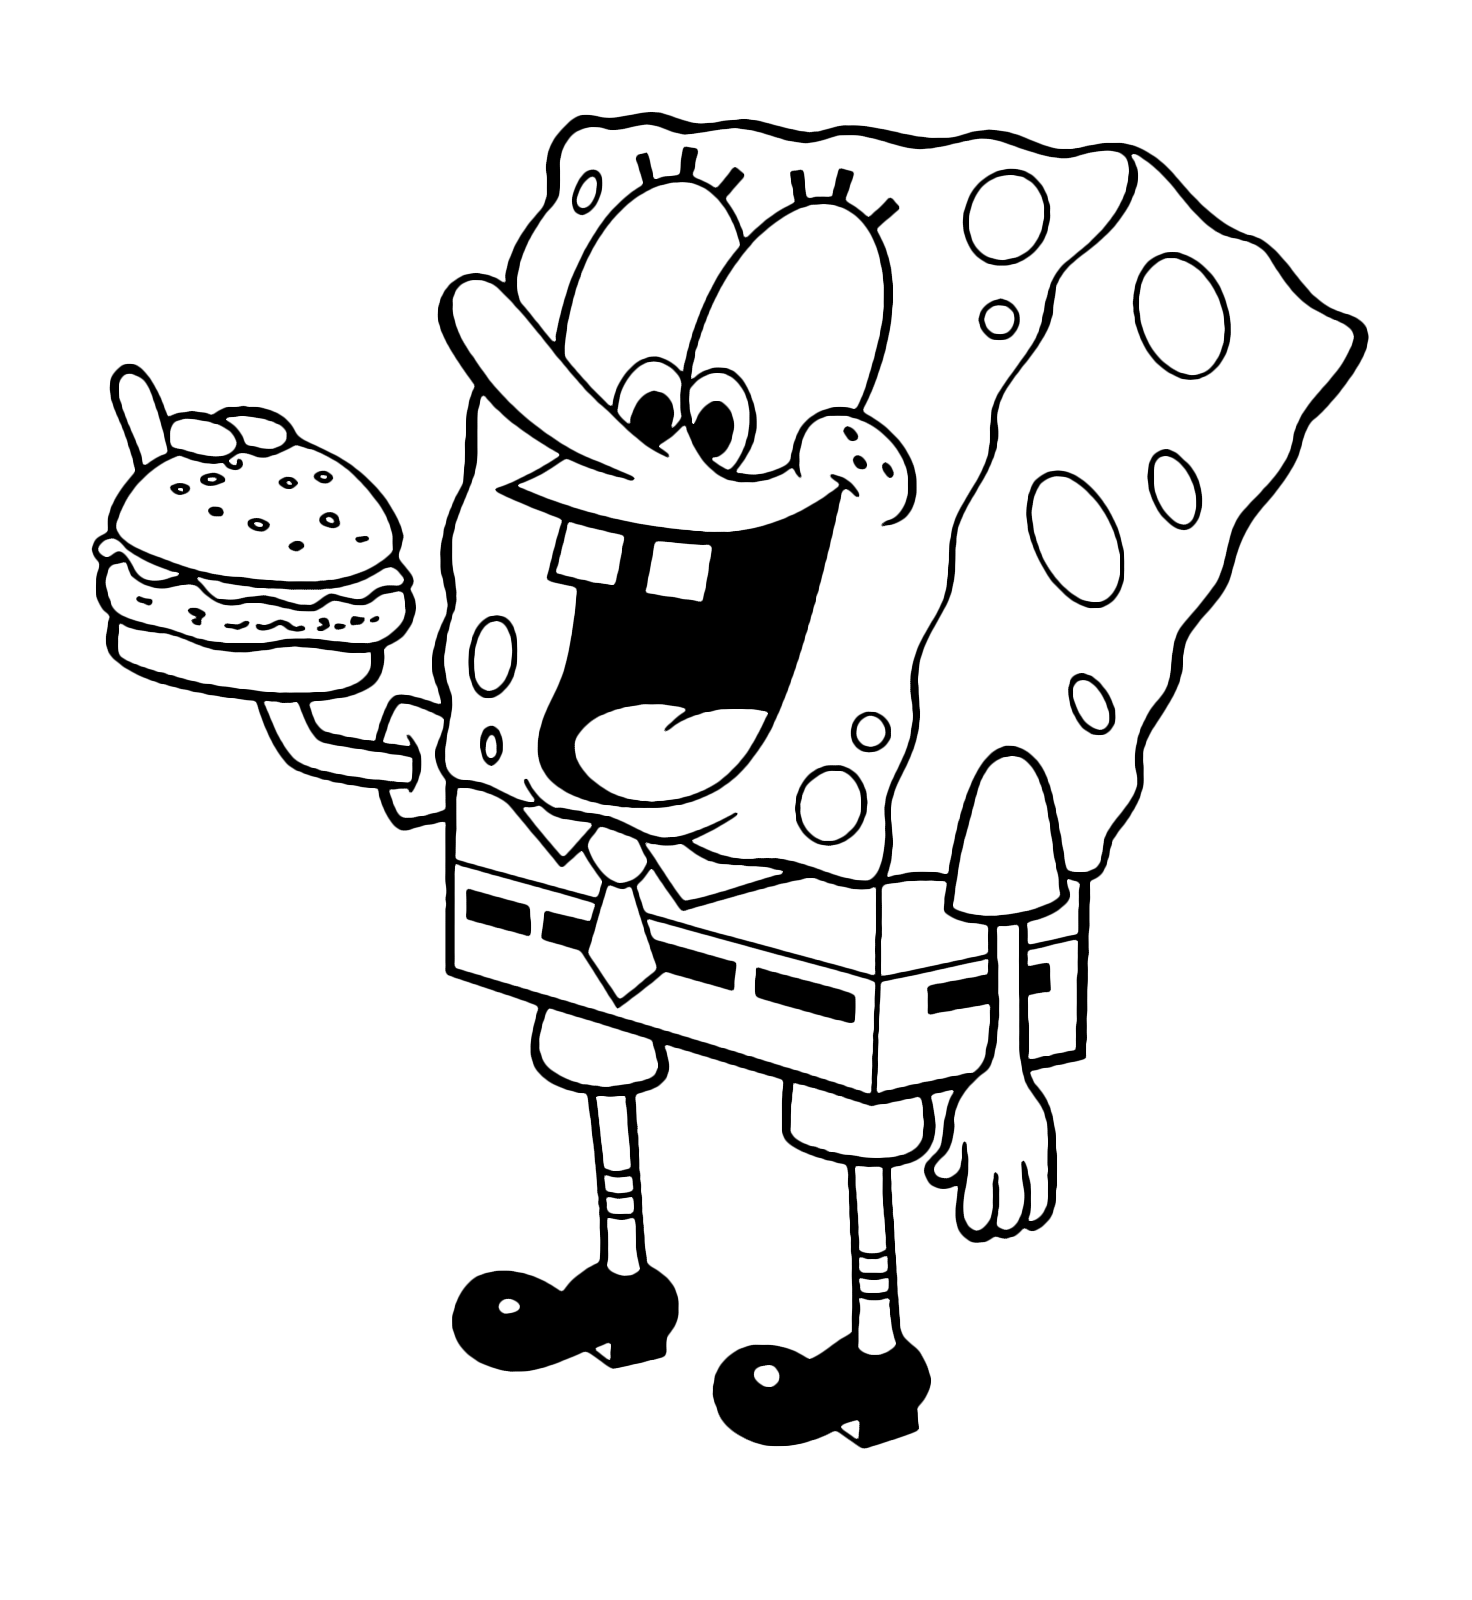 SpongeBob - SpongeBob is eating a sandwich